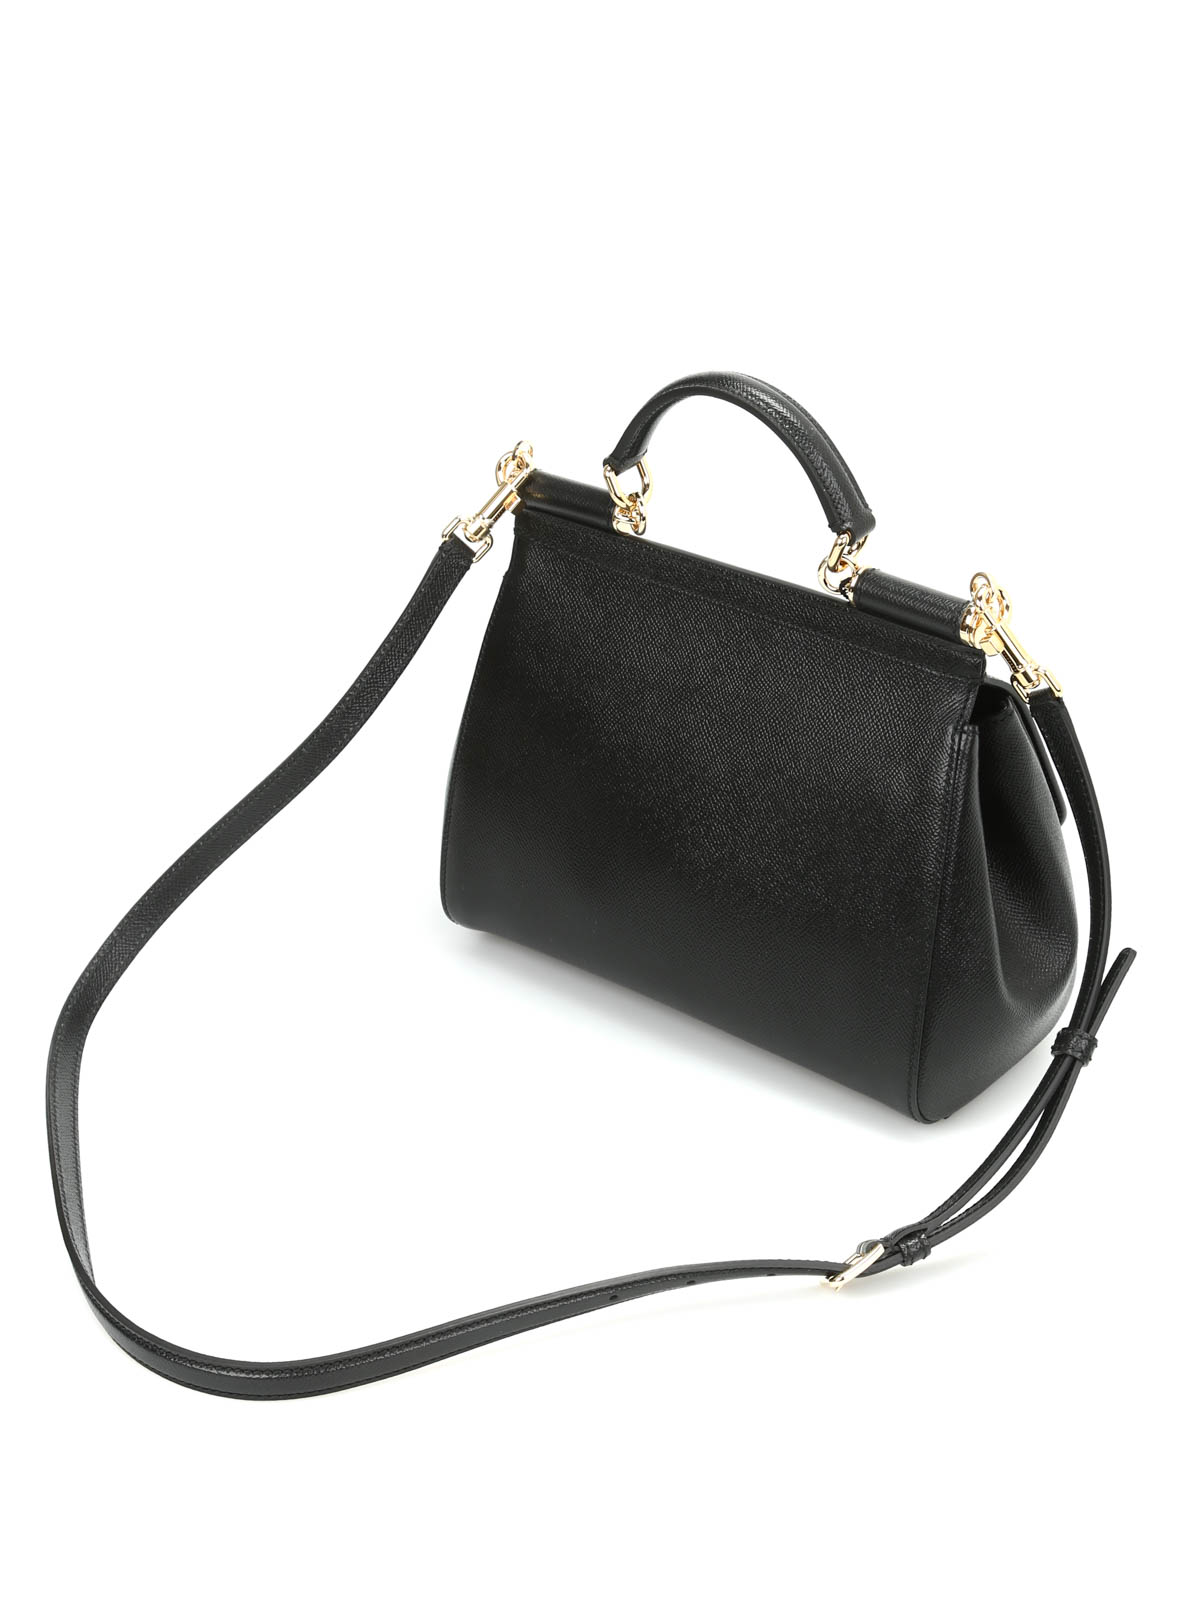 Dolce Gabbana Original Sicily Bag with Top Handle Black Leather Medium Size